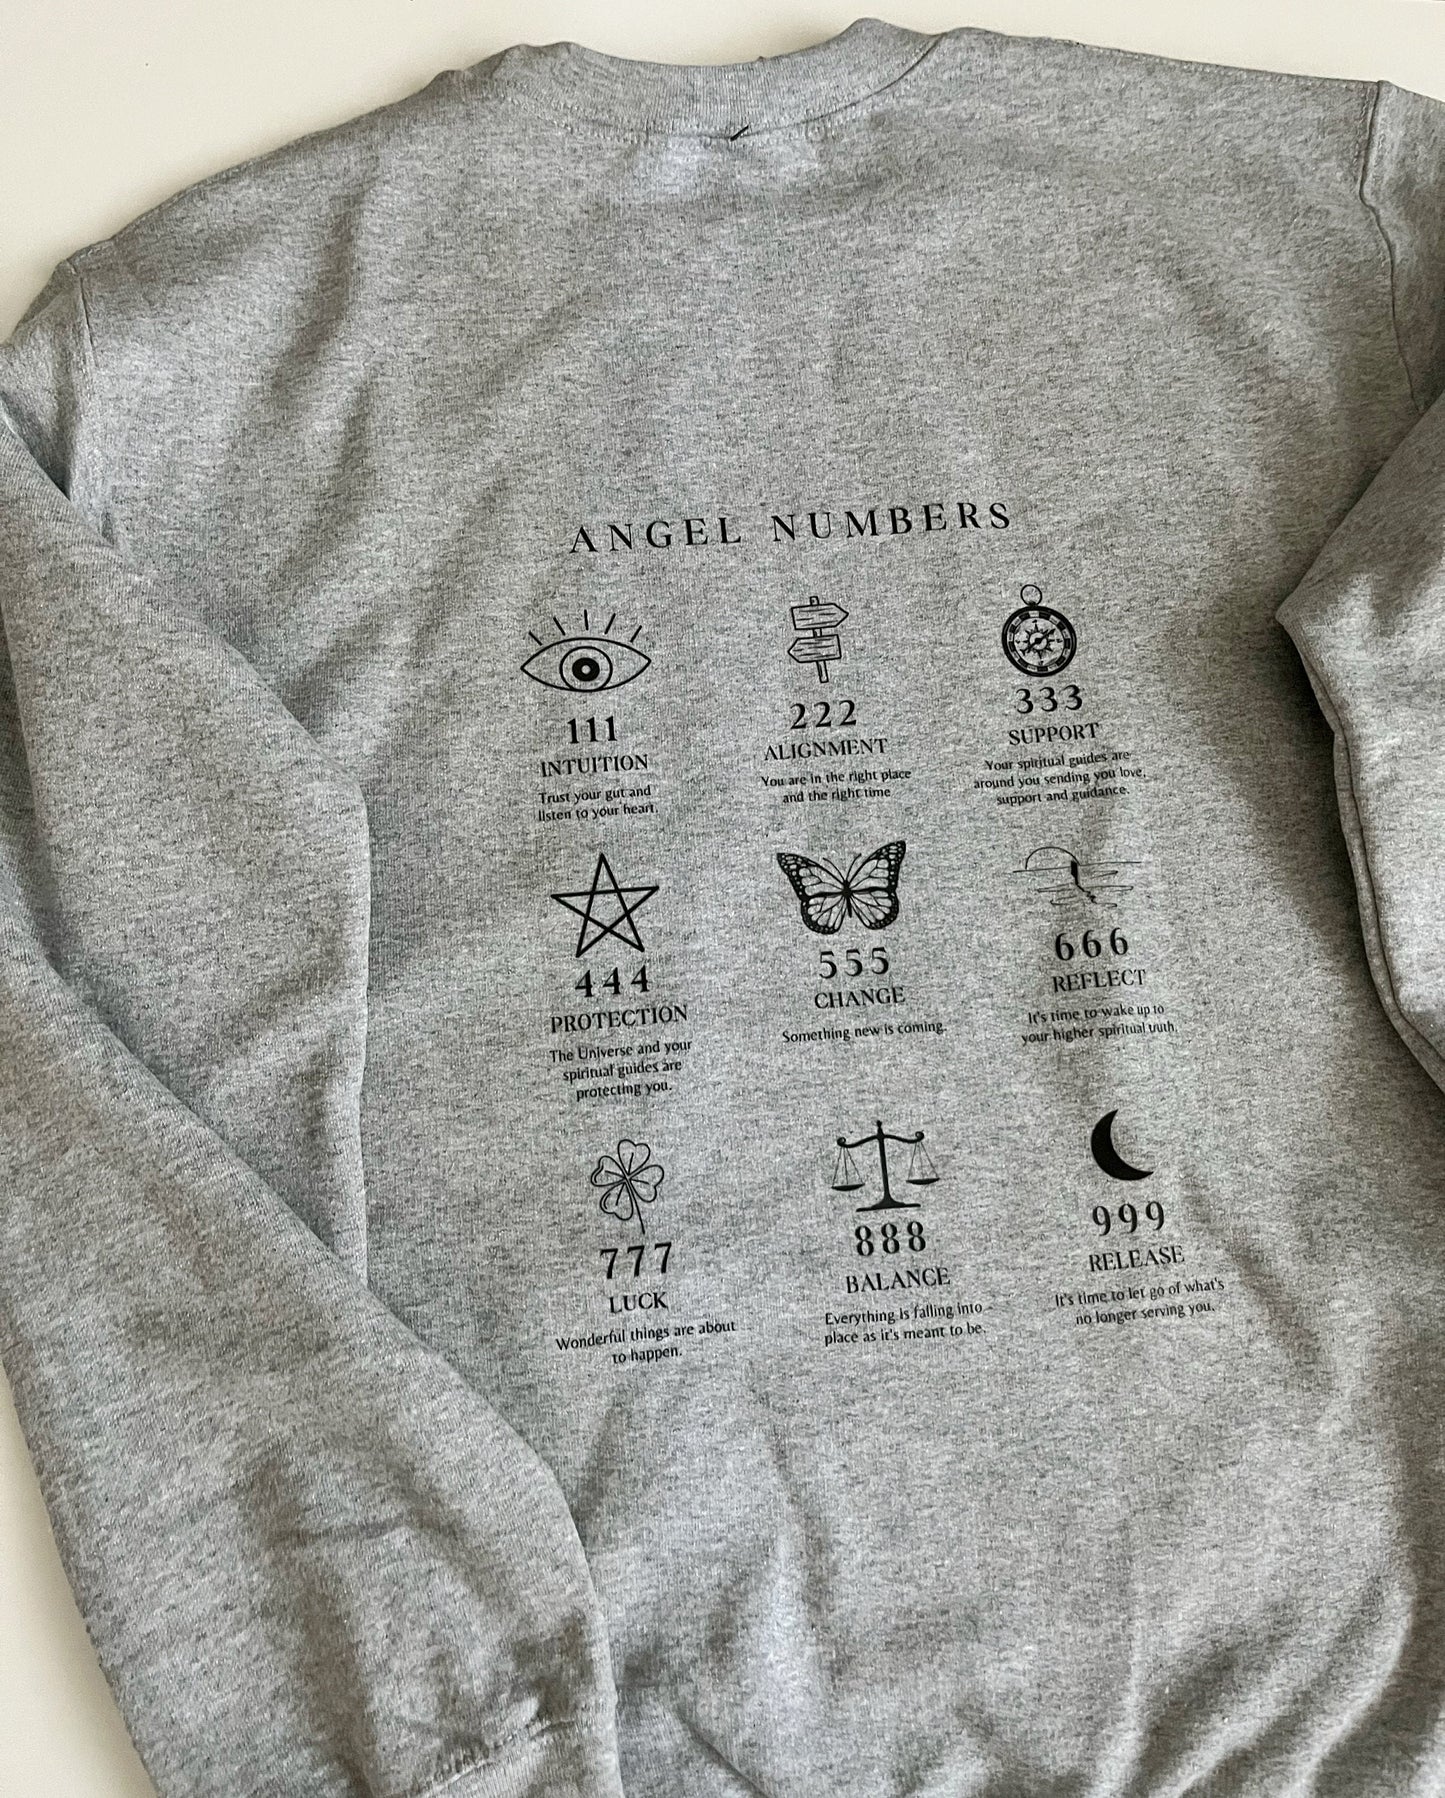 Angel Numbers Crewneck, Grey Sweatshirt, Numerology, Spiritual, Divine Woman, Manifest, 1111, Spirit Guides, Number Graphic Shirt, Cute Tops